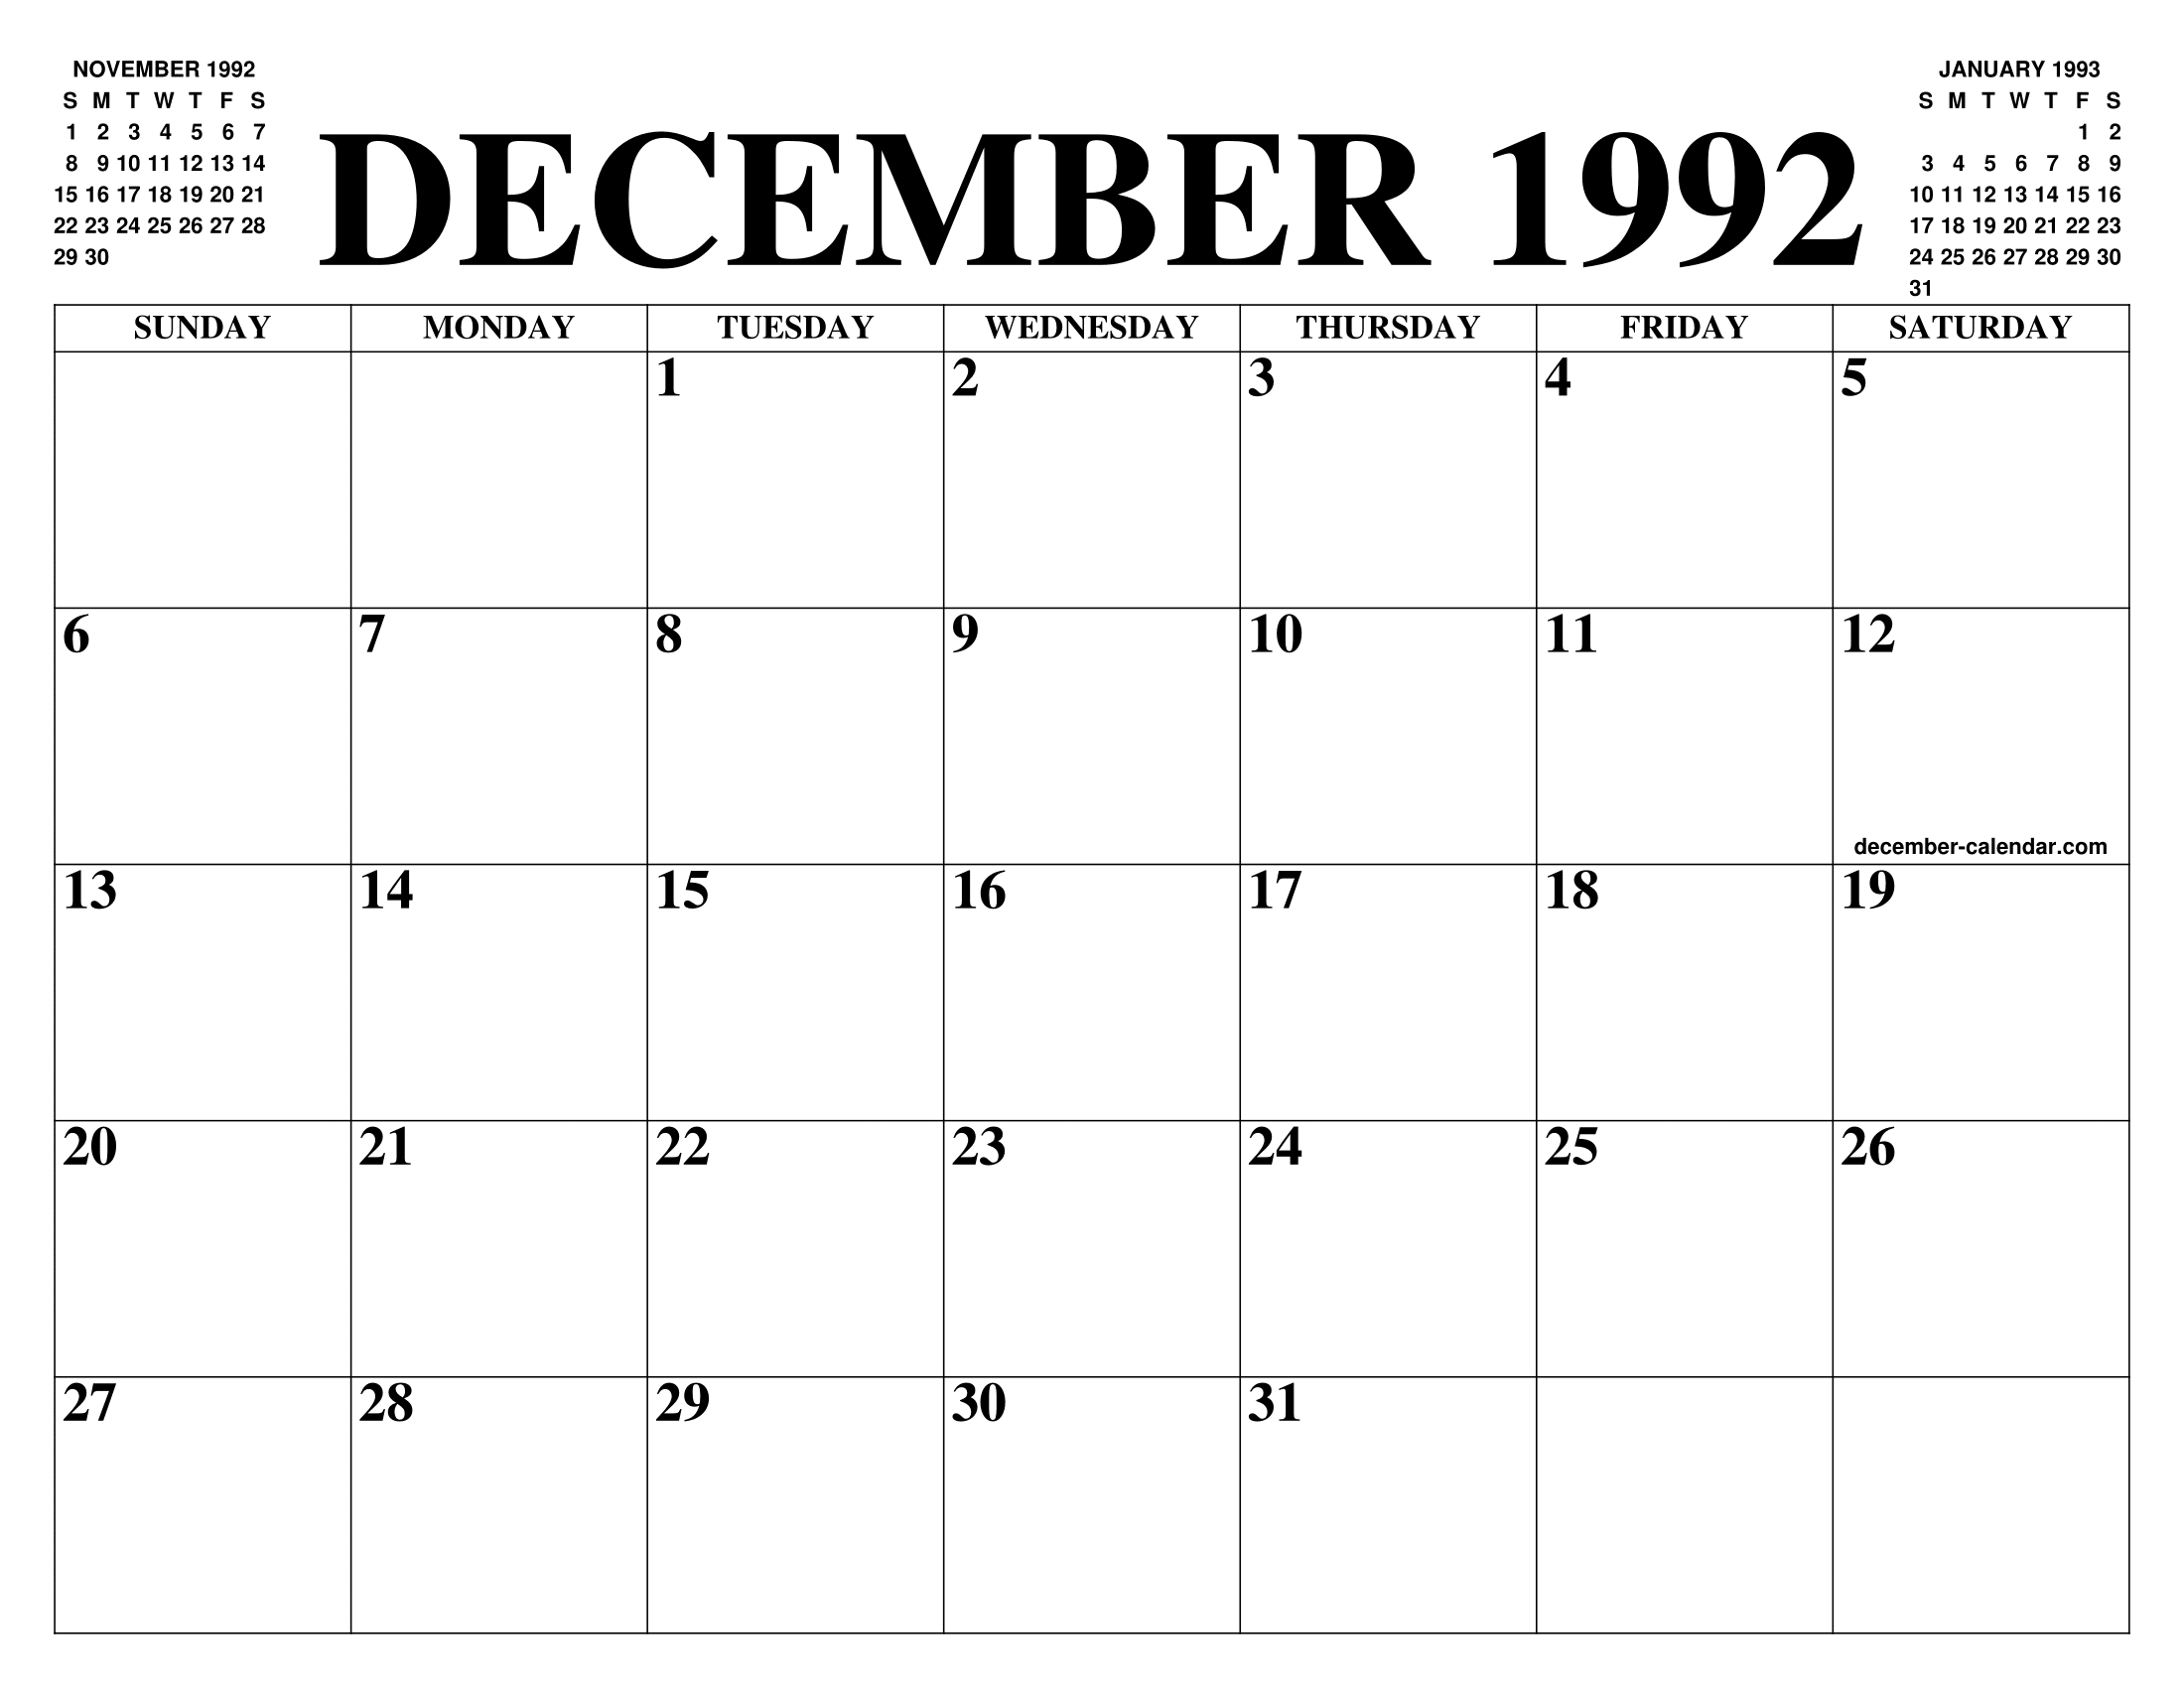 DECEMBER 1992 CALENDAR OF THE MONTH: FREE PRINTABLE DECEMBER CALENDAR